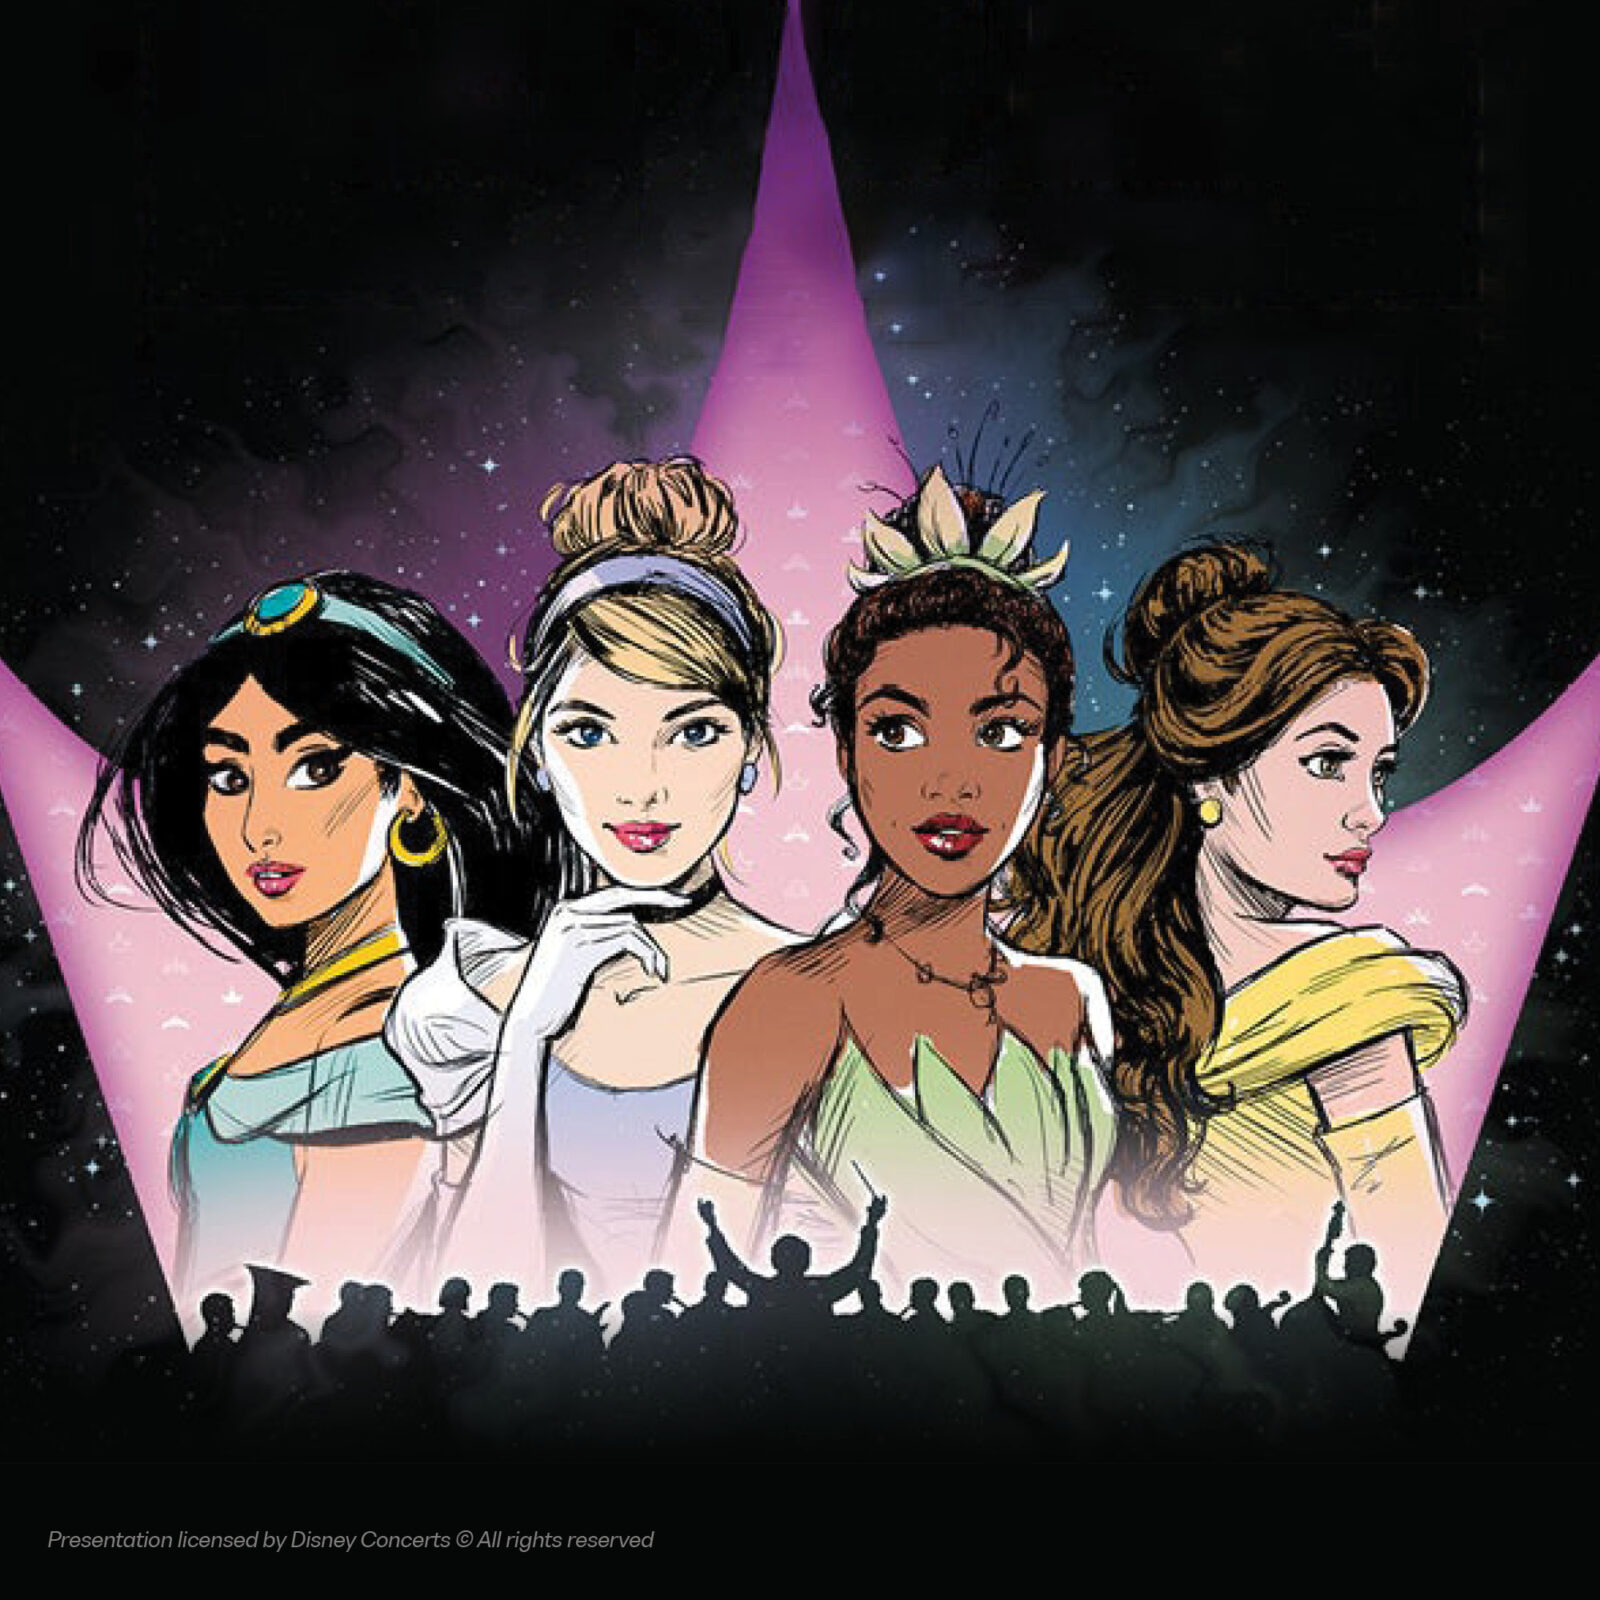 Disney Princess: The Concert